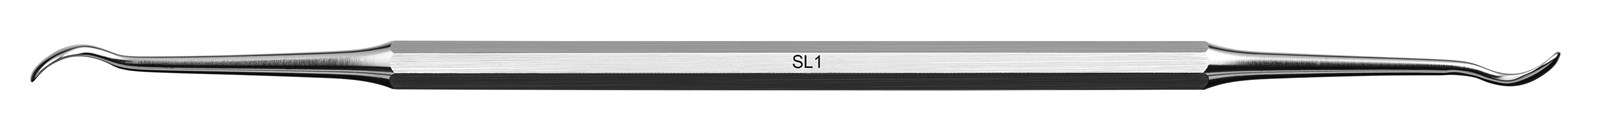 Instrument pro sinus lift - SL1, ADEP červený